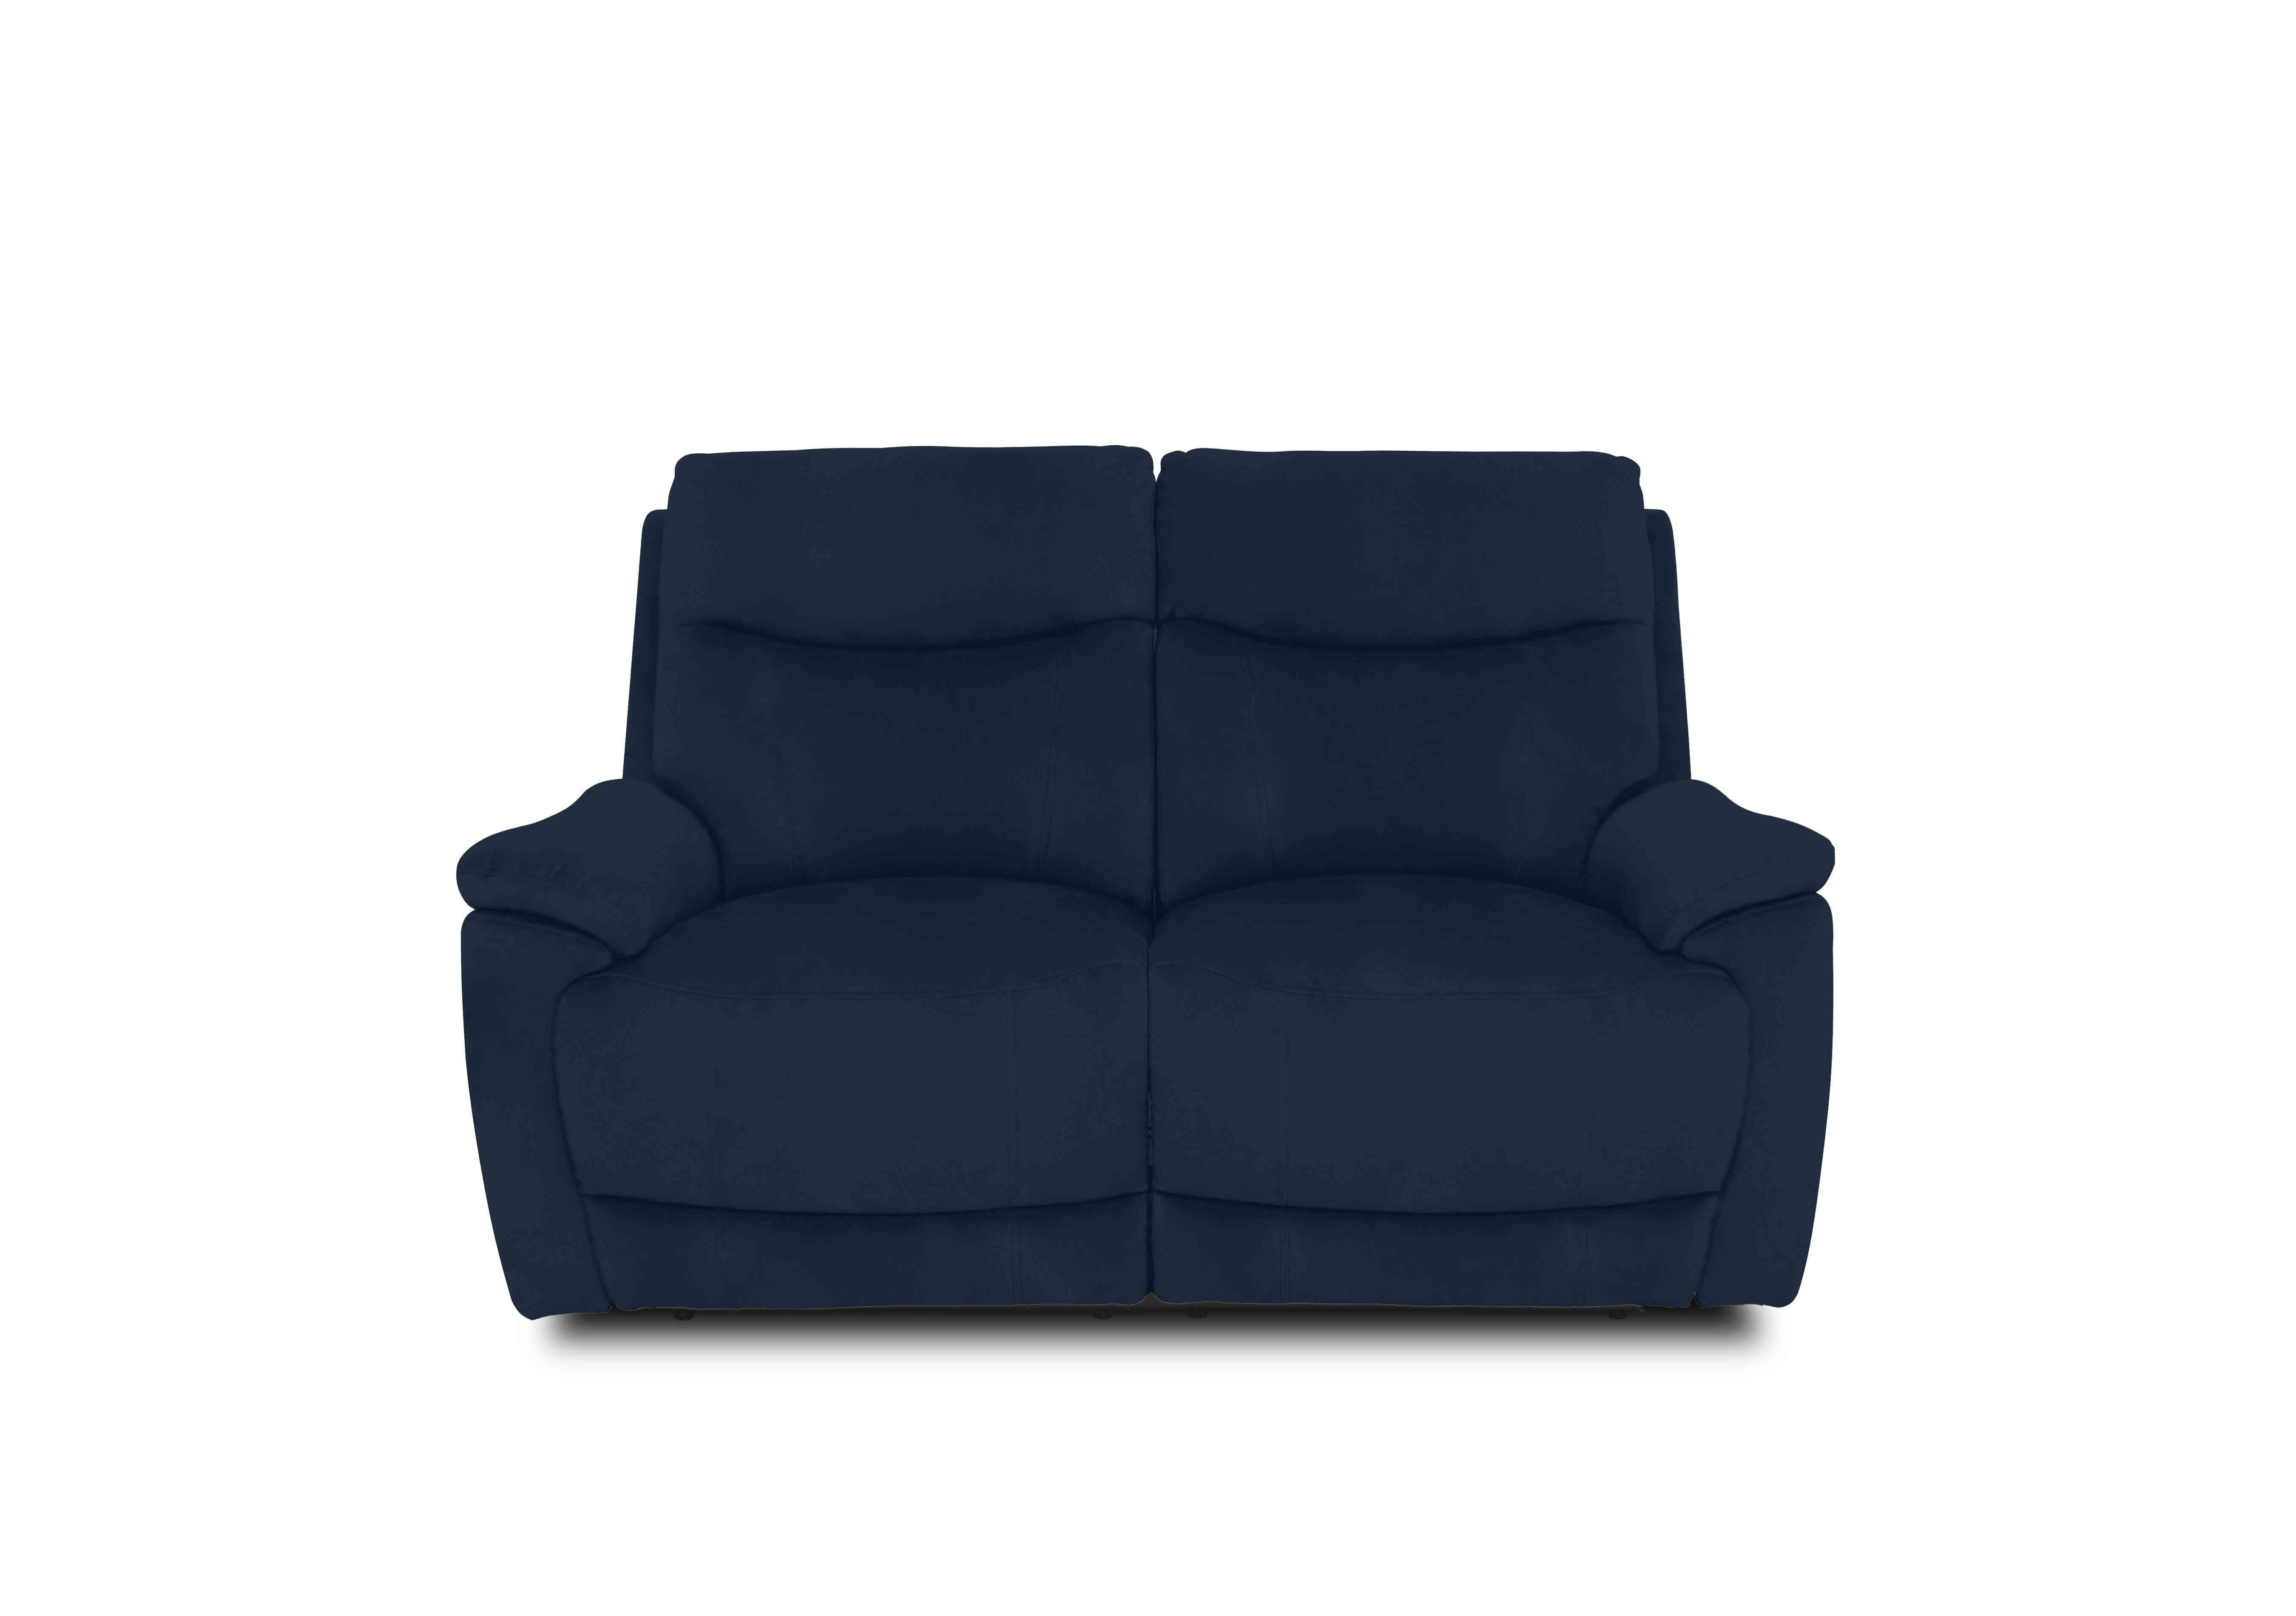 Sloane 2 Seater Fabric Sofa in 50495 Opulence Royal on Furniture Village